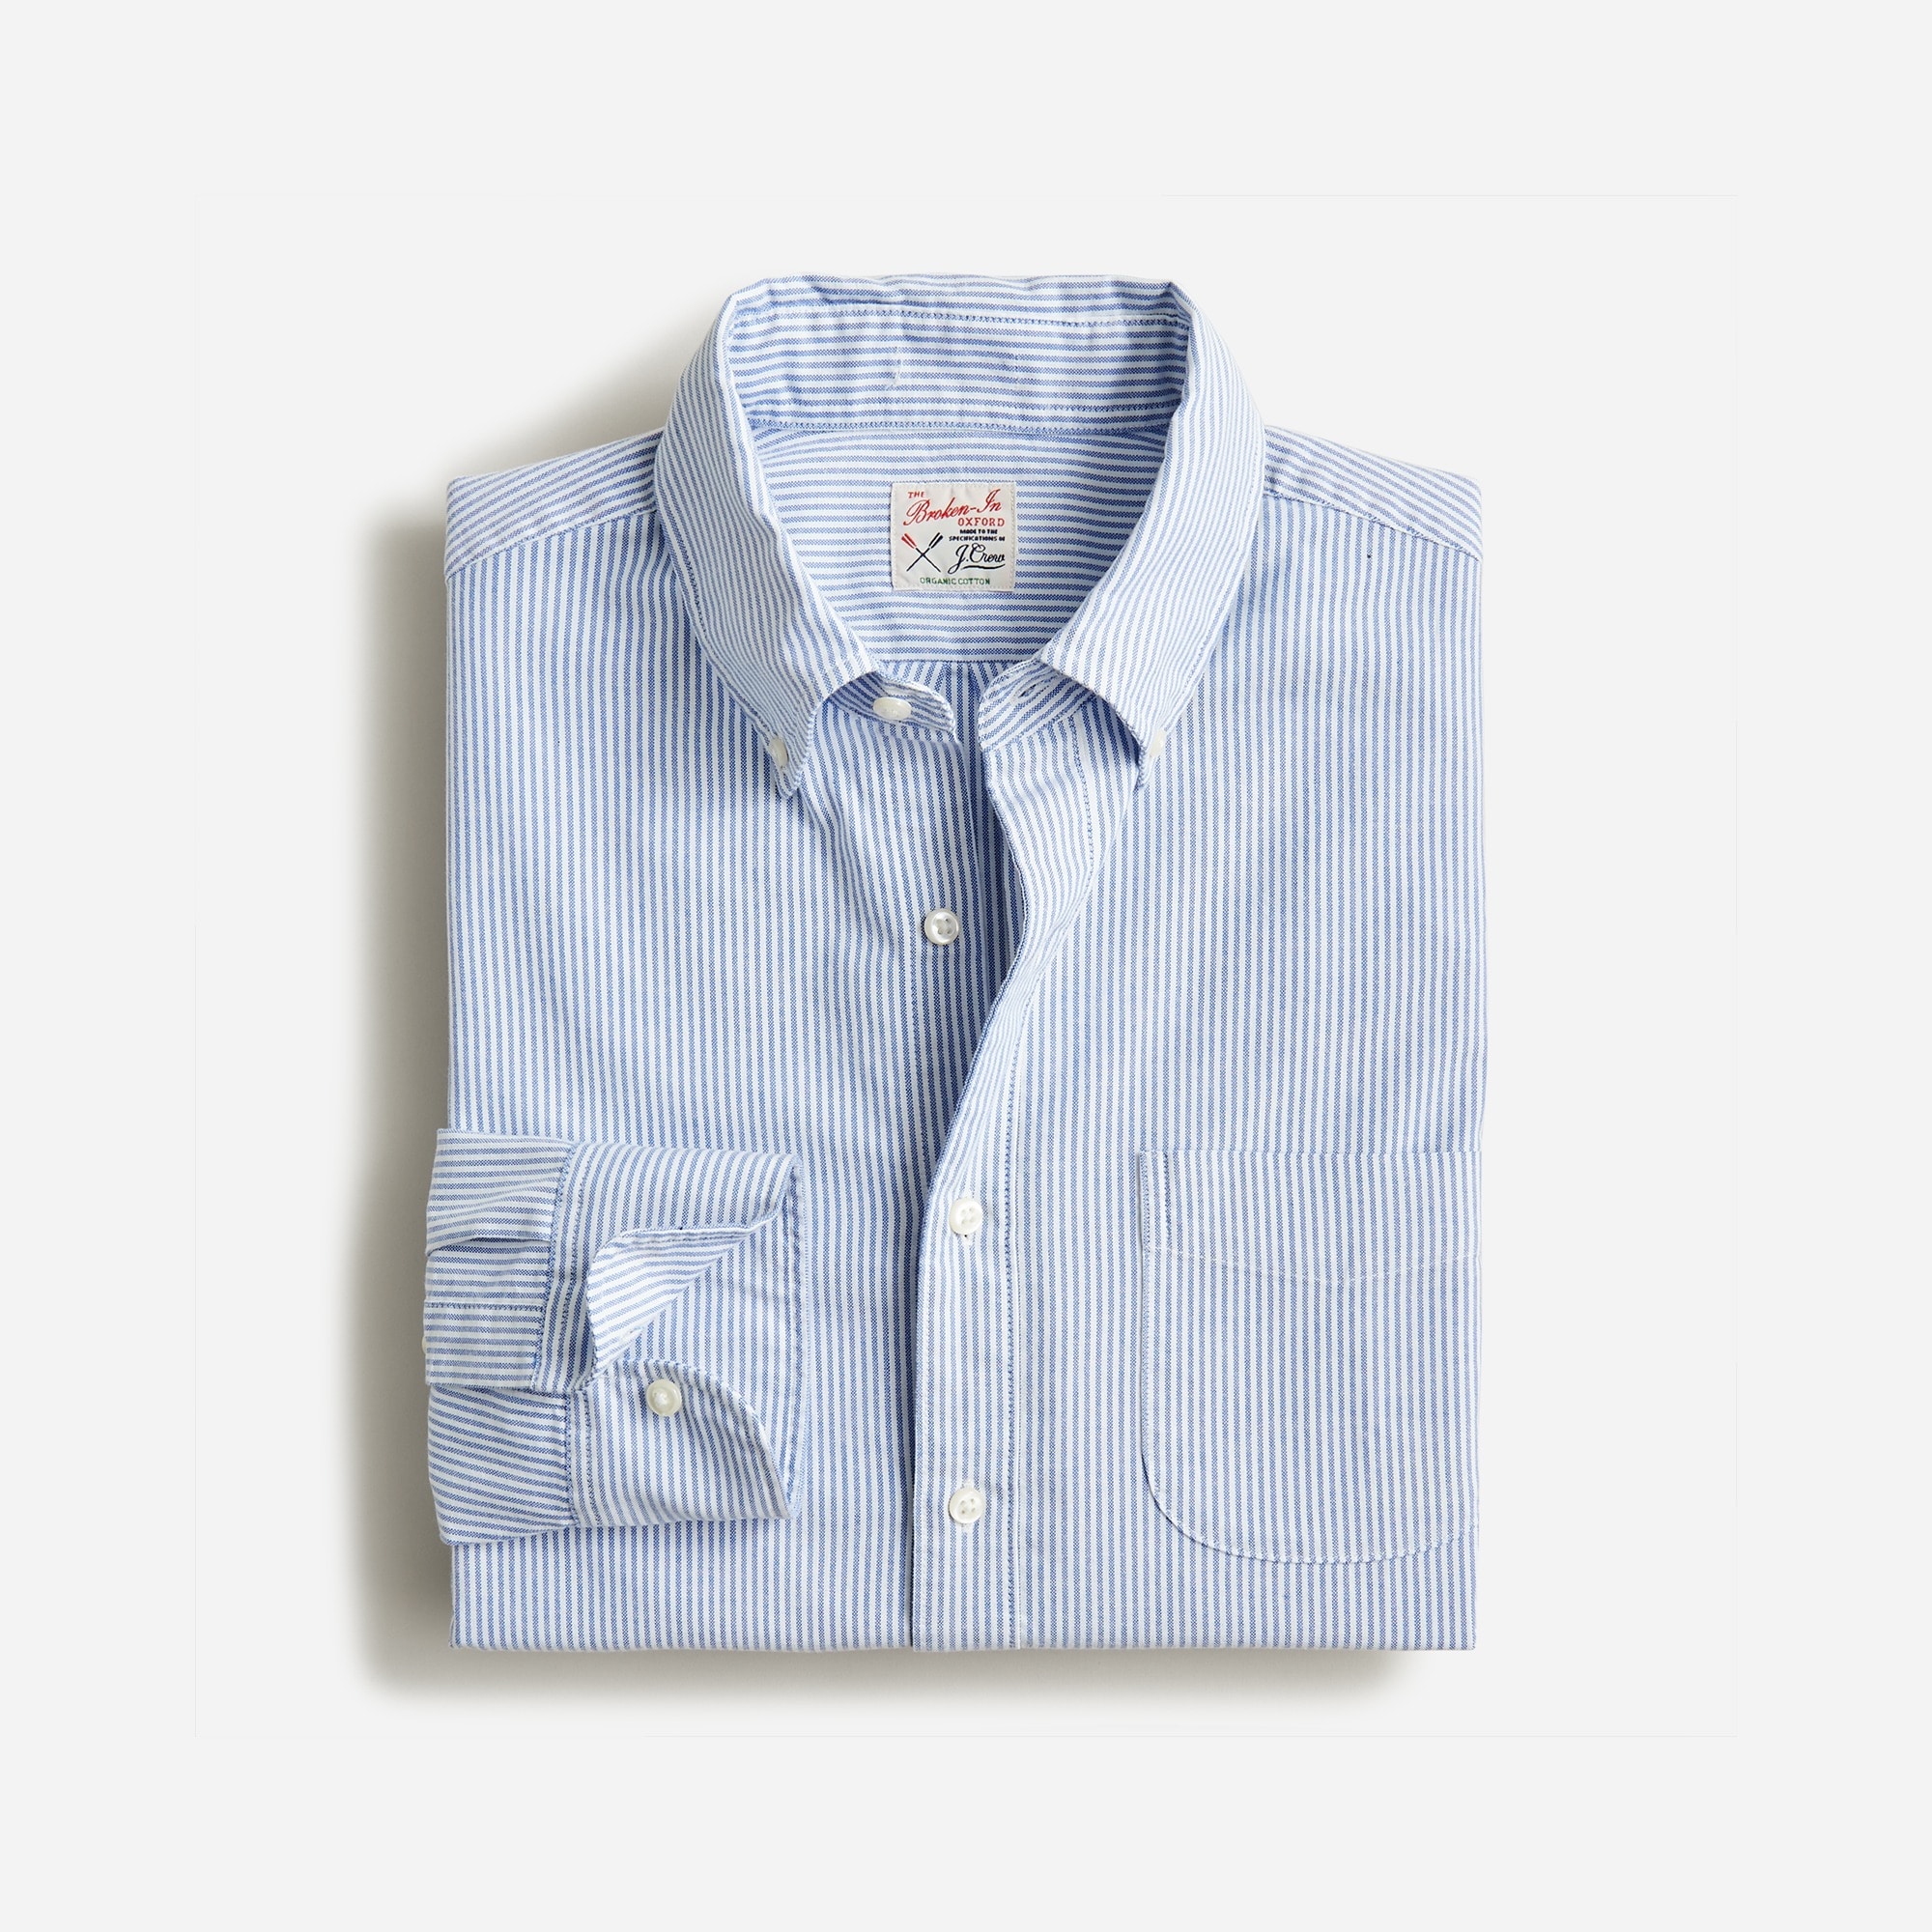  Broken-in organic cotton oxford shirt